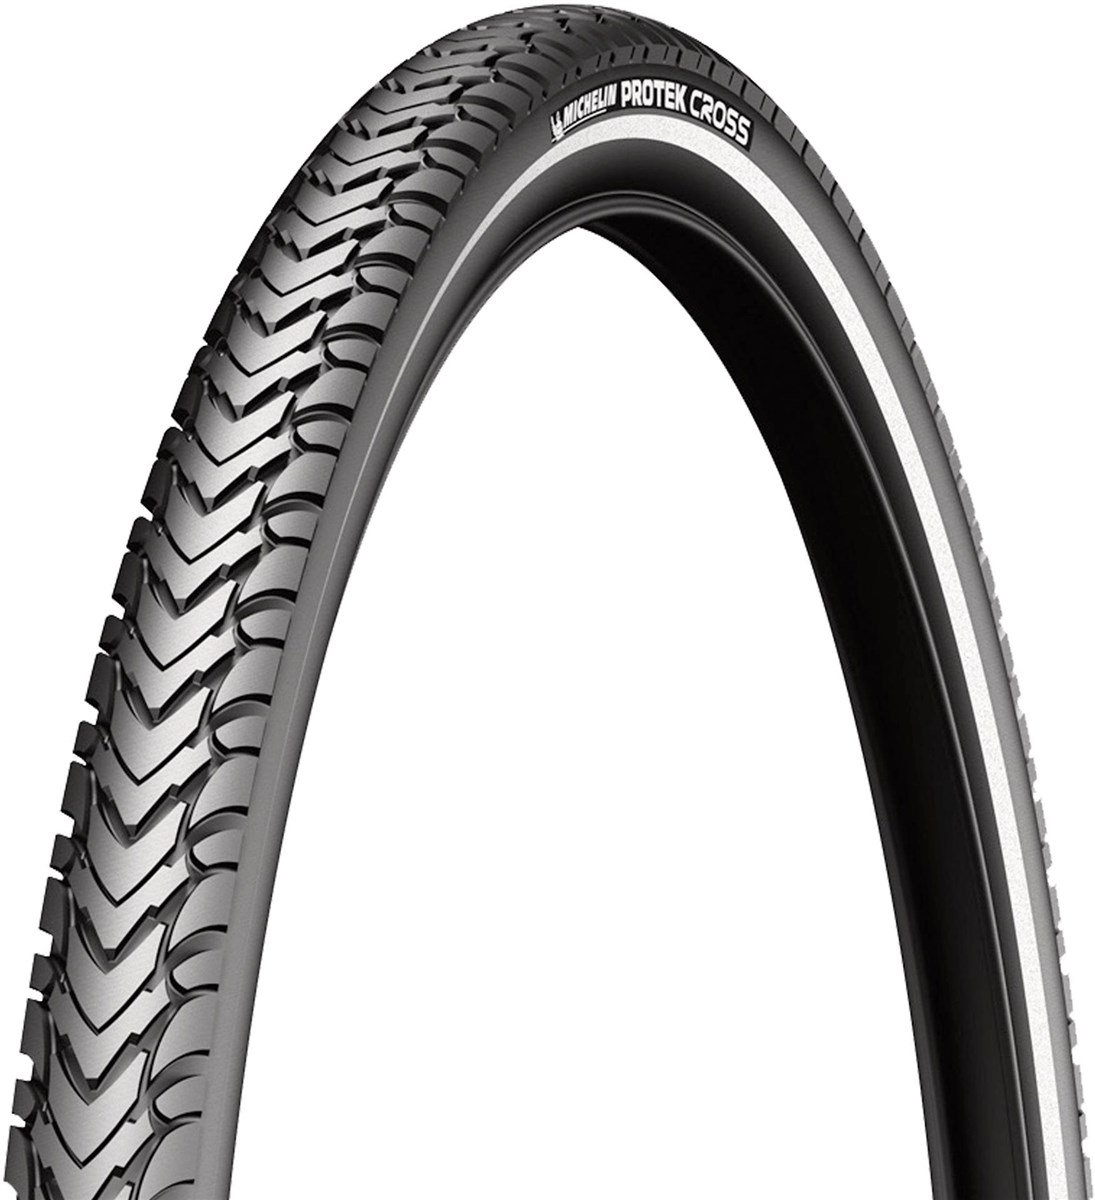 Michelin Protek Cross Hybrid Tyre product image